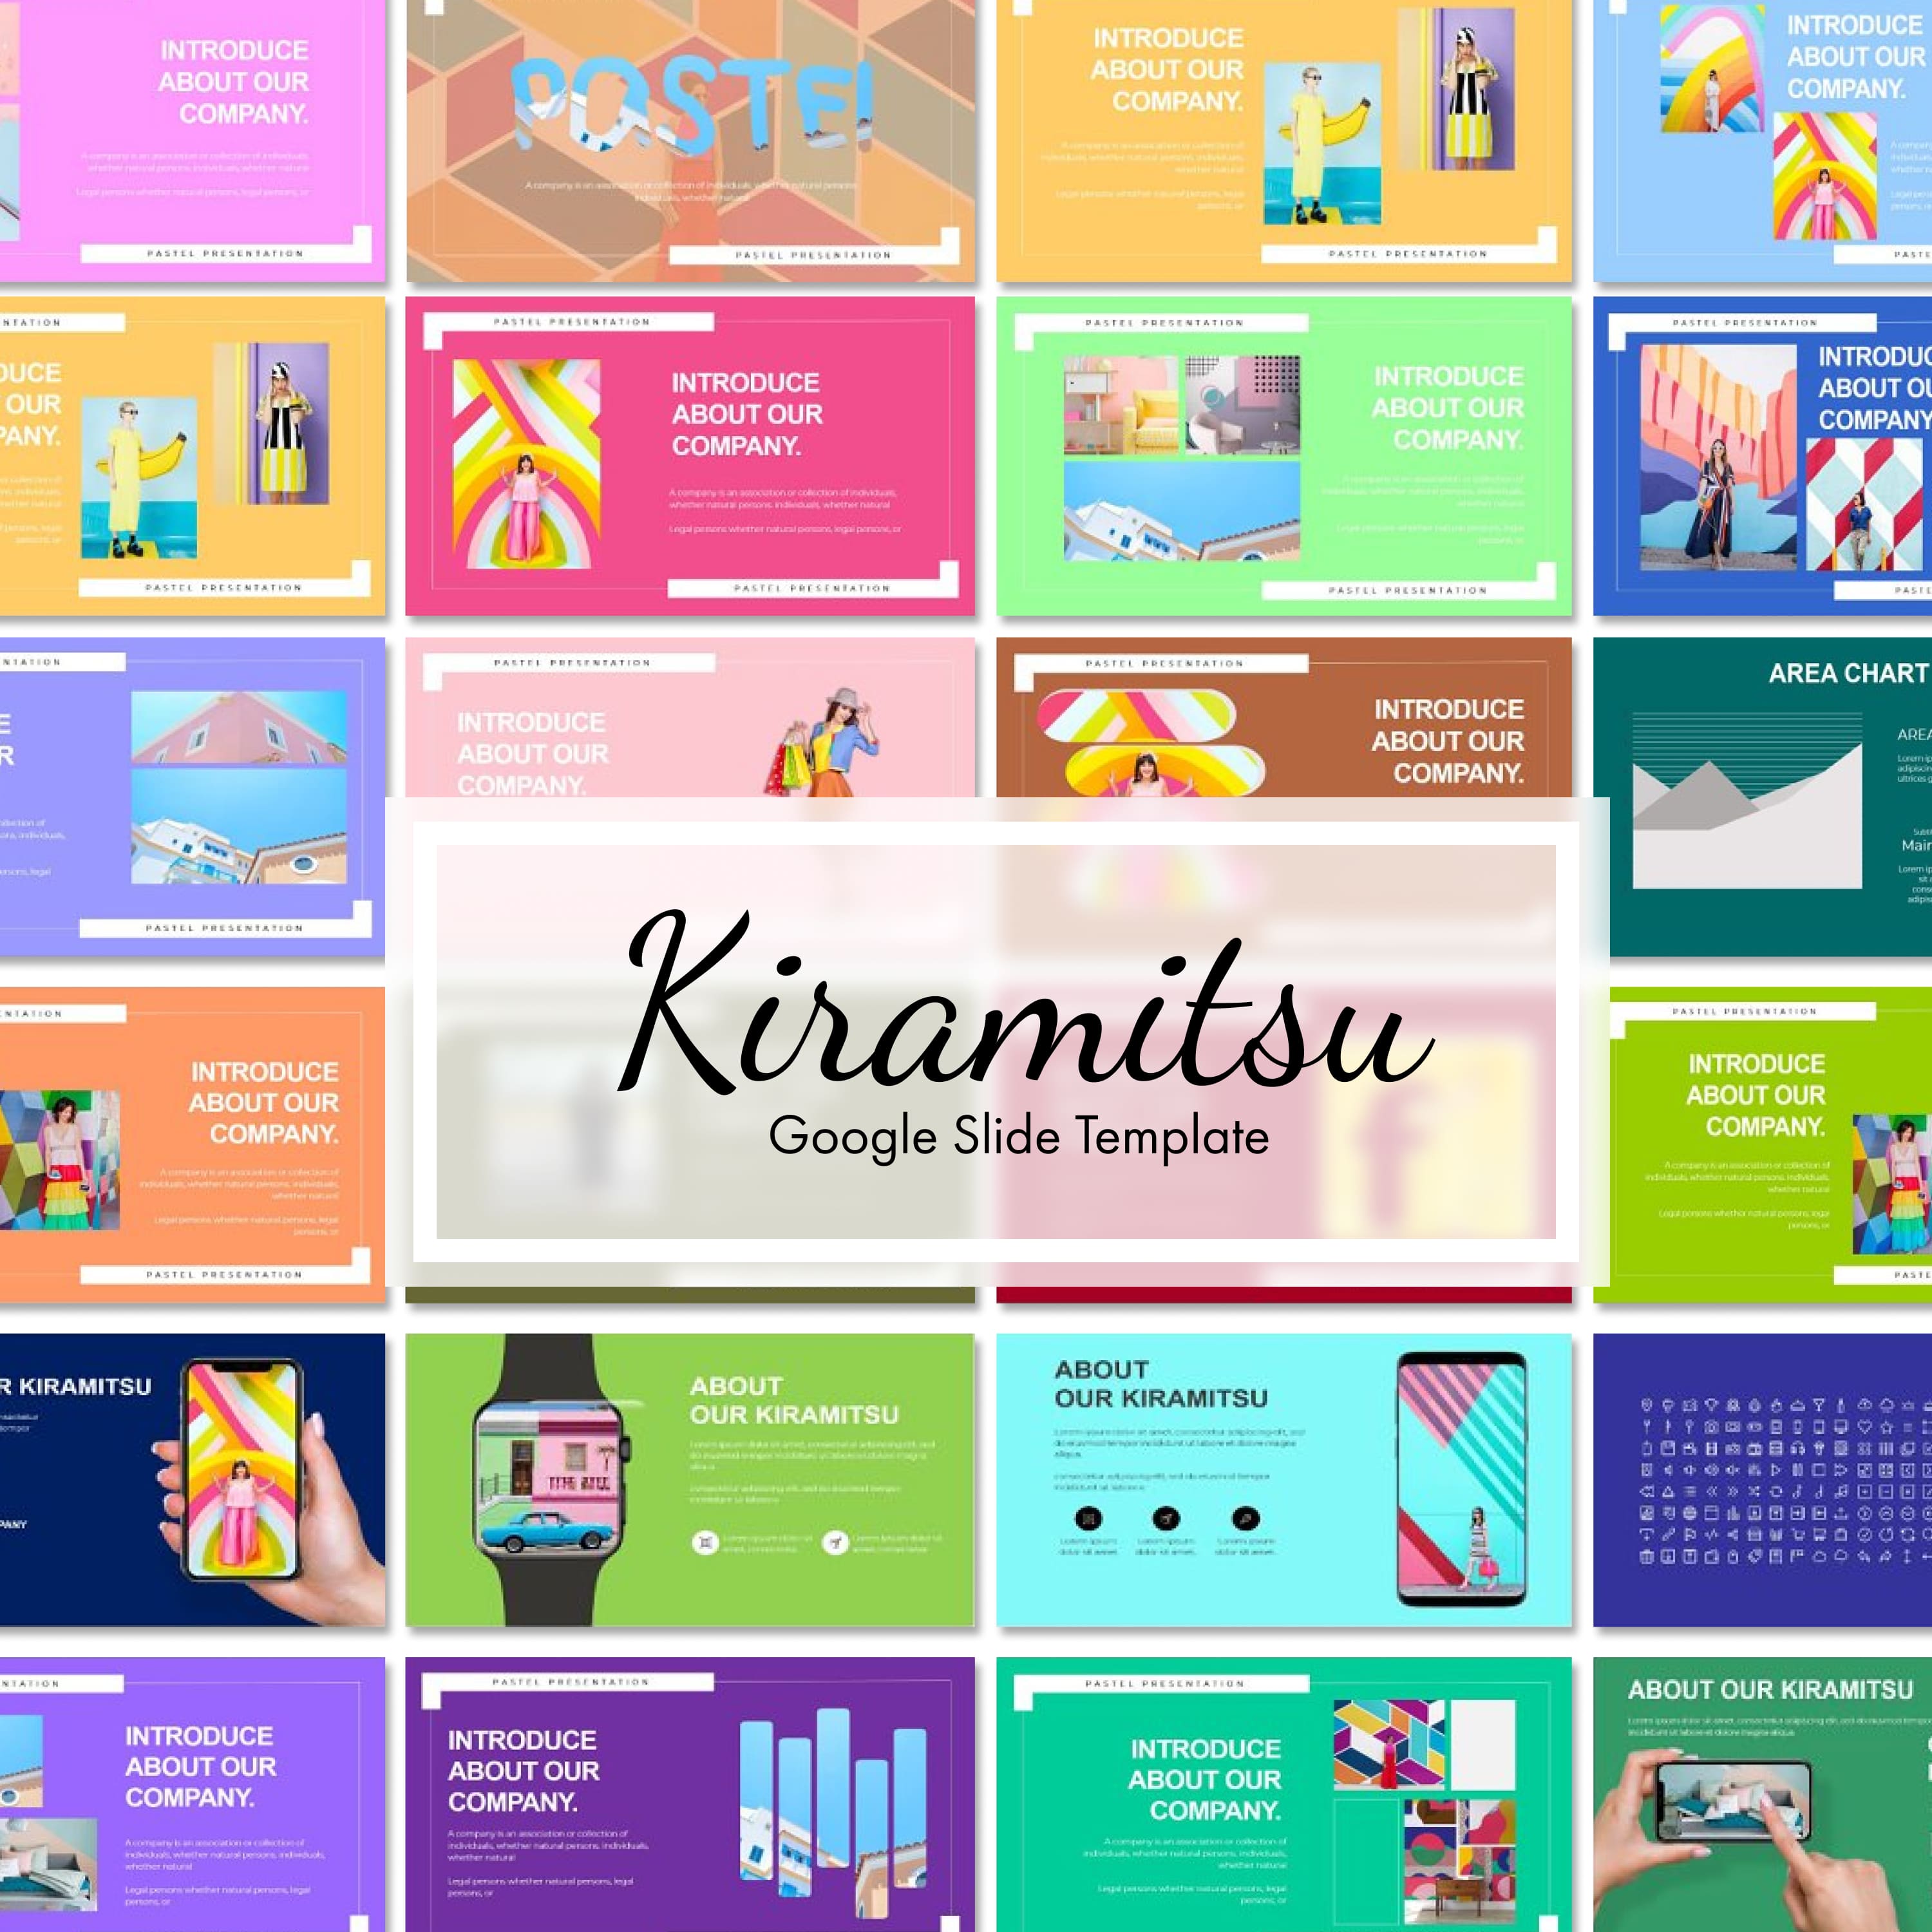 Kiramitsu google slide template - main image preview.